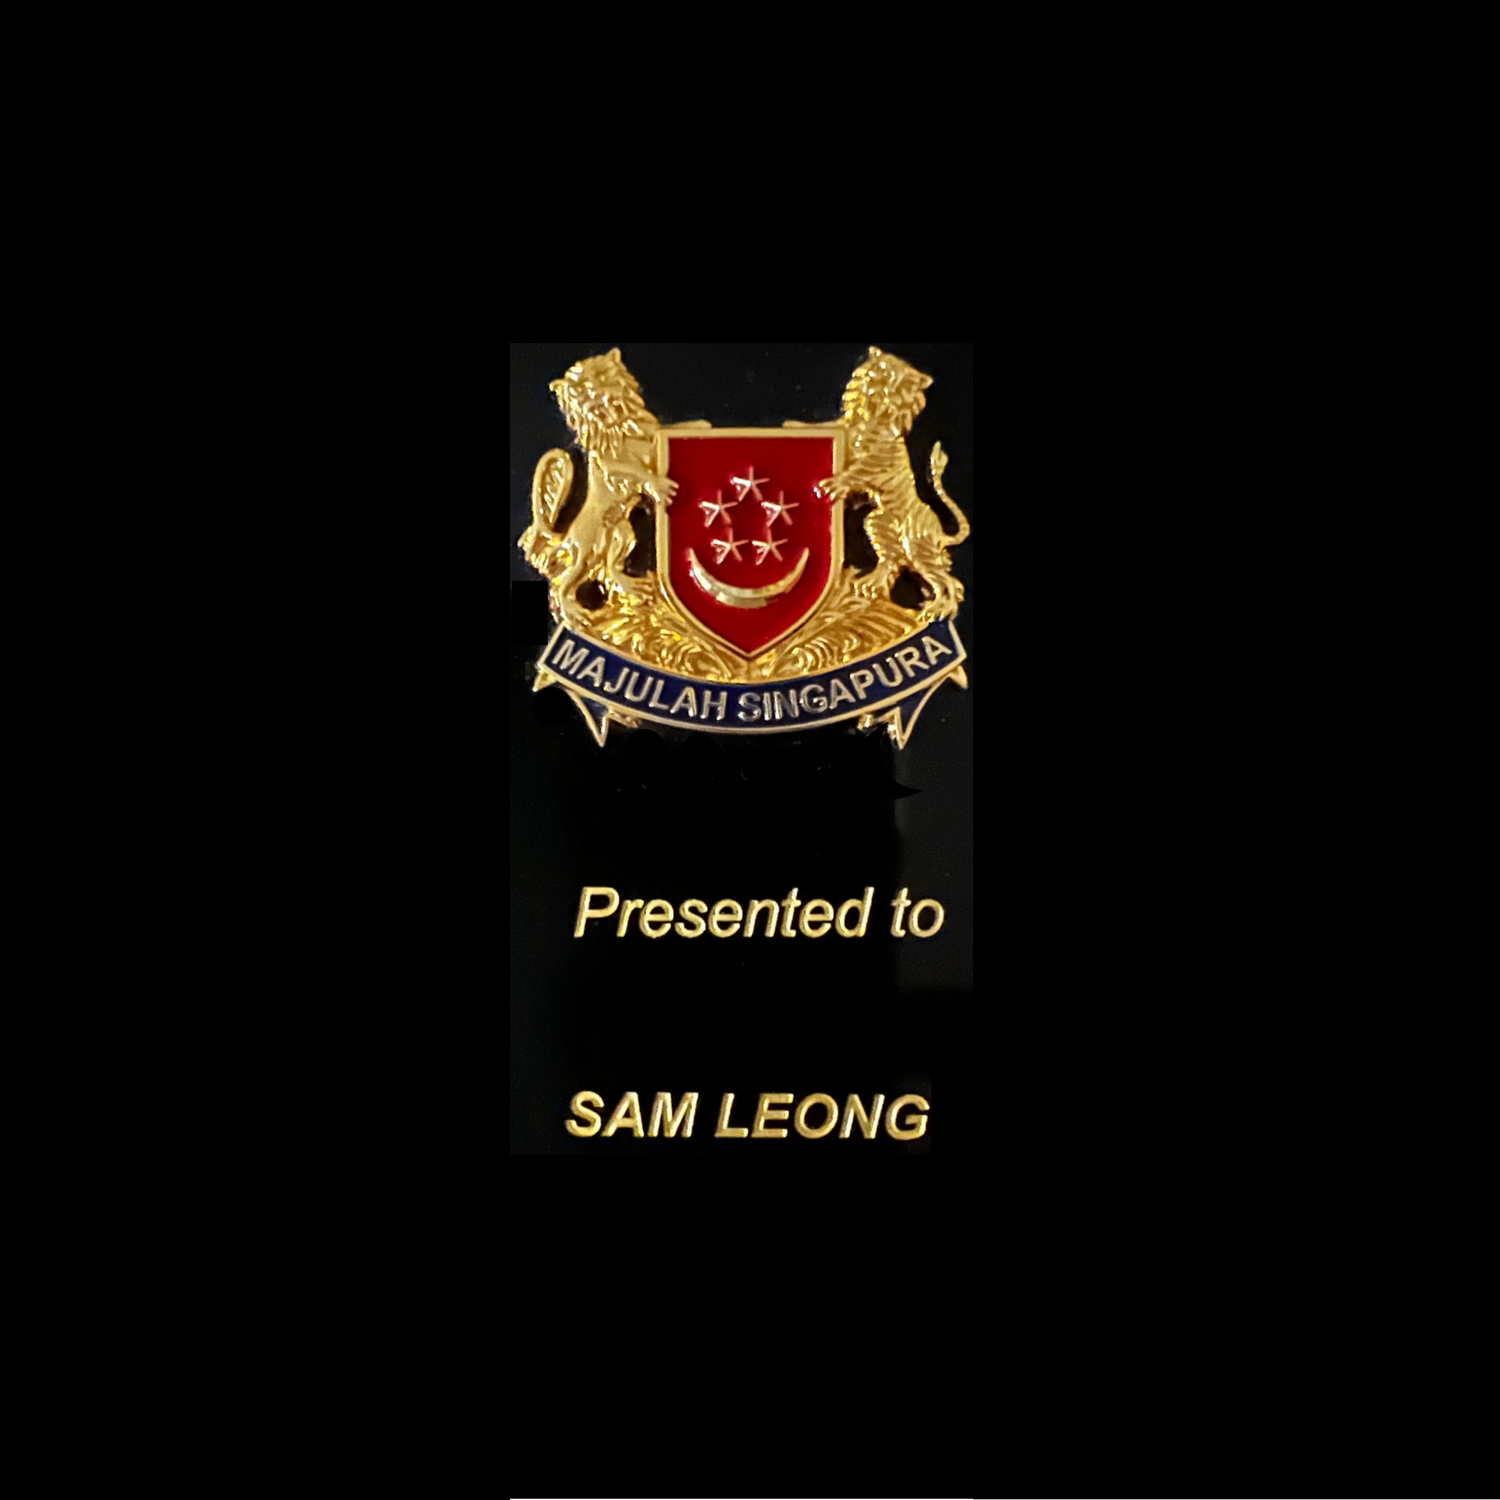 Presented SAM LEONG